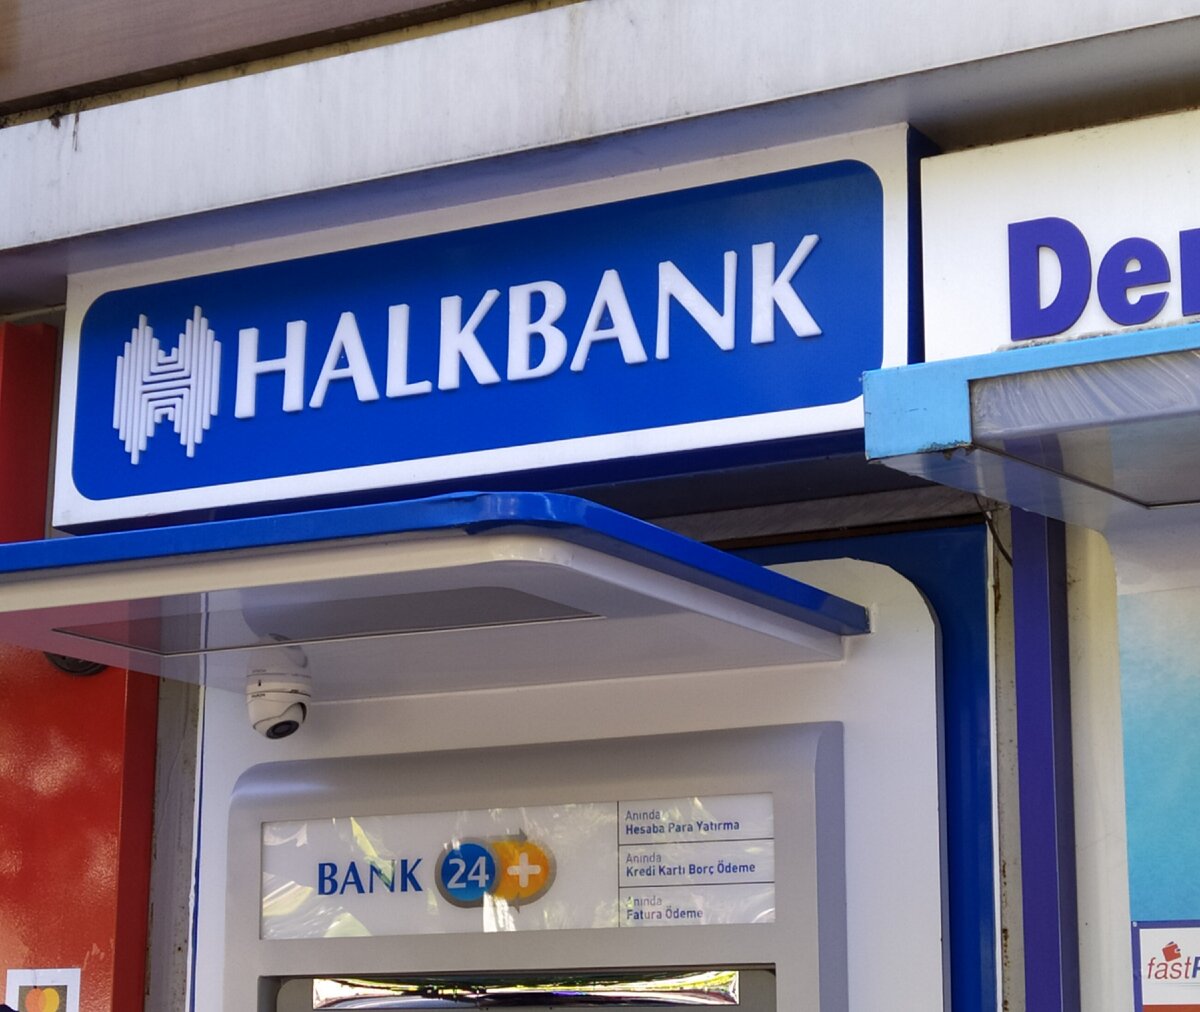 Халк банк вход. Halkbank Турция. Банкоматы в Турции. Банкоматы мир в Турции. Турецкий Халк банк.